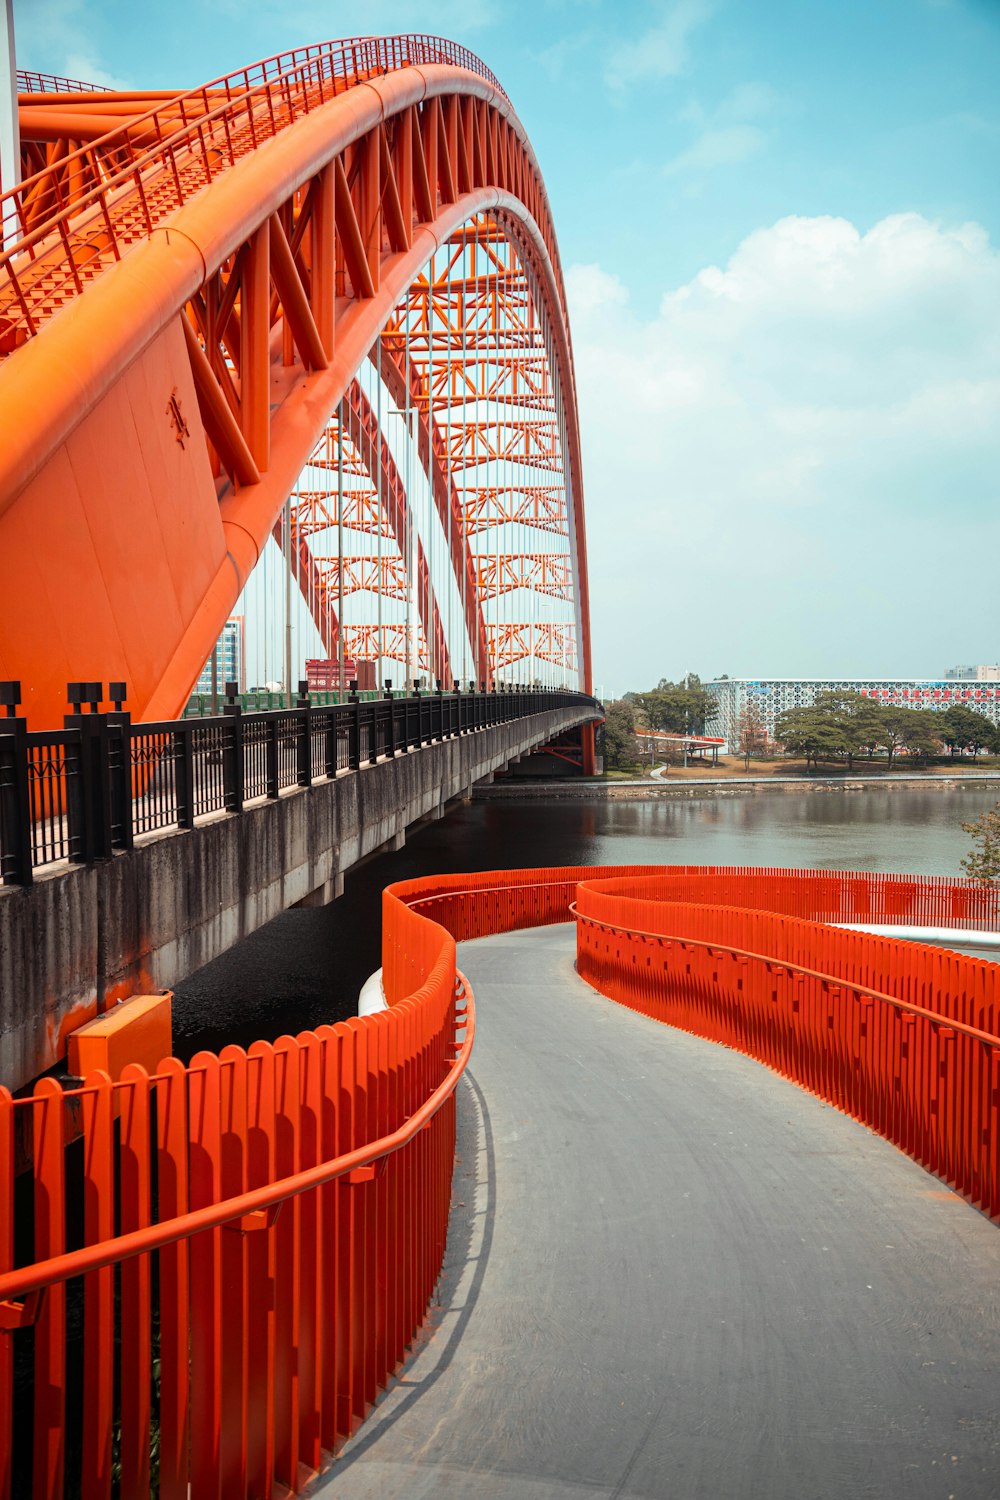 an orange bridge over a body of water